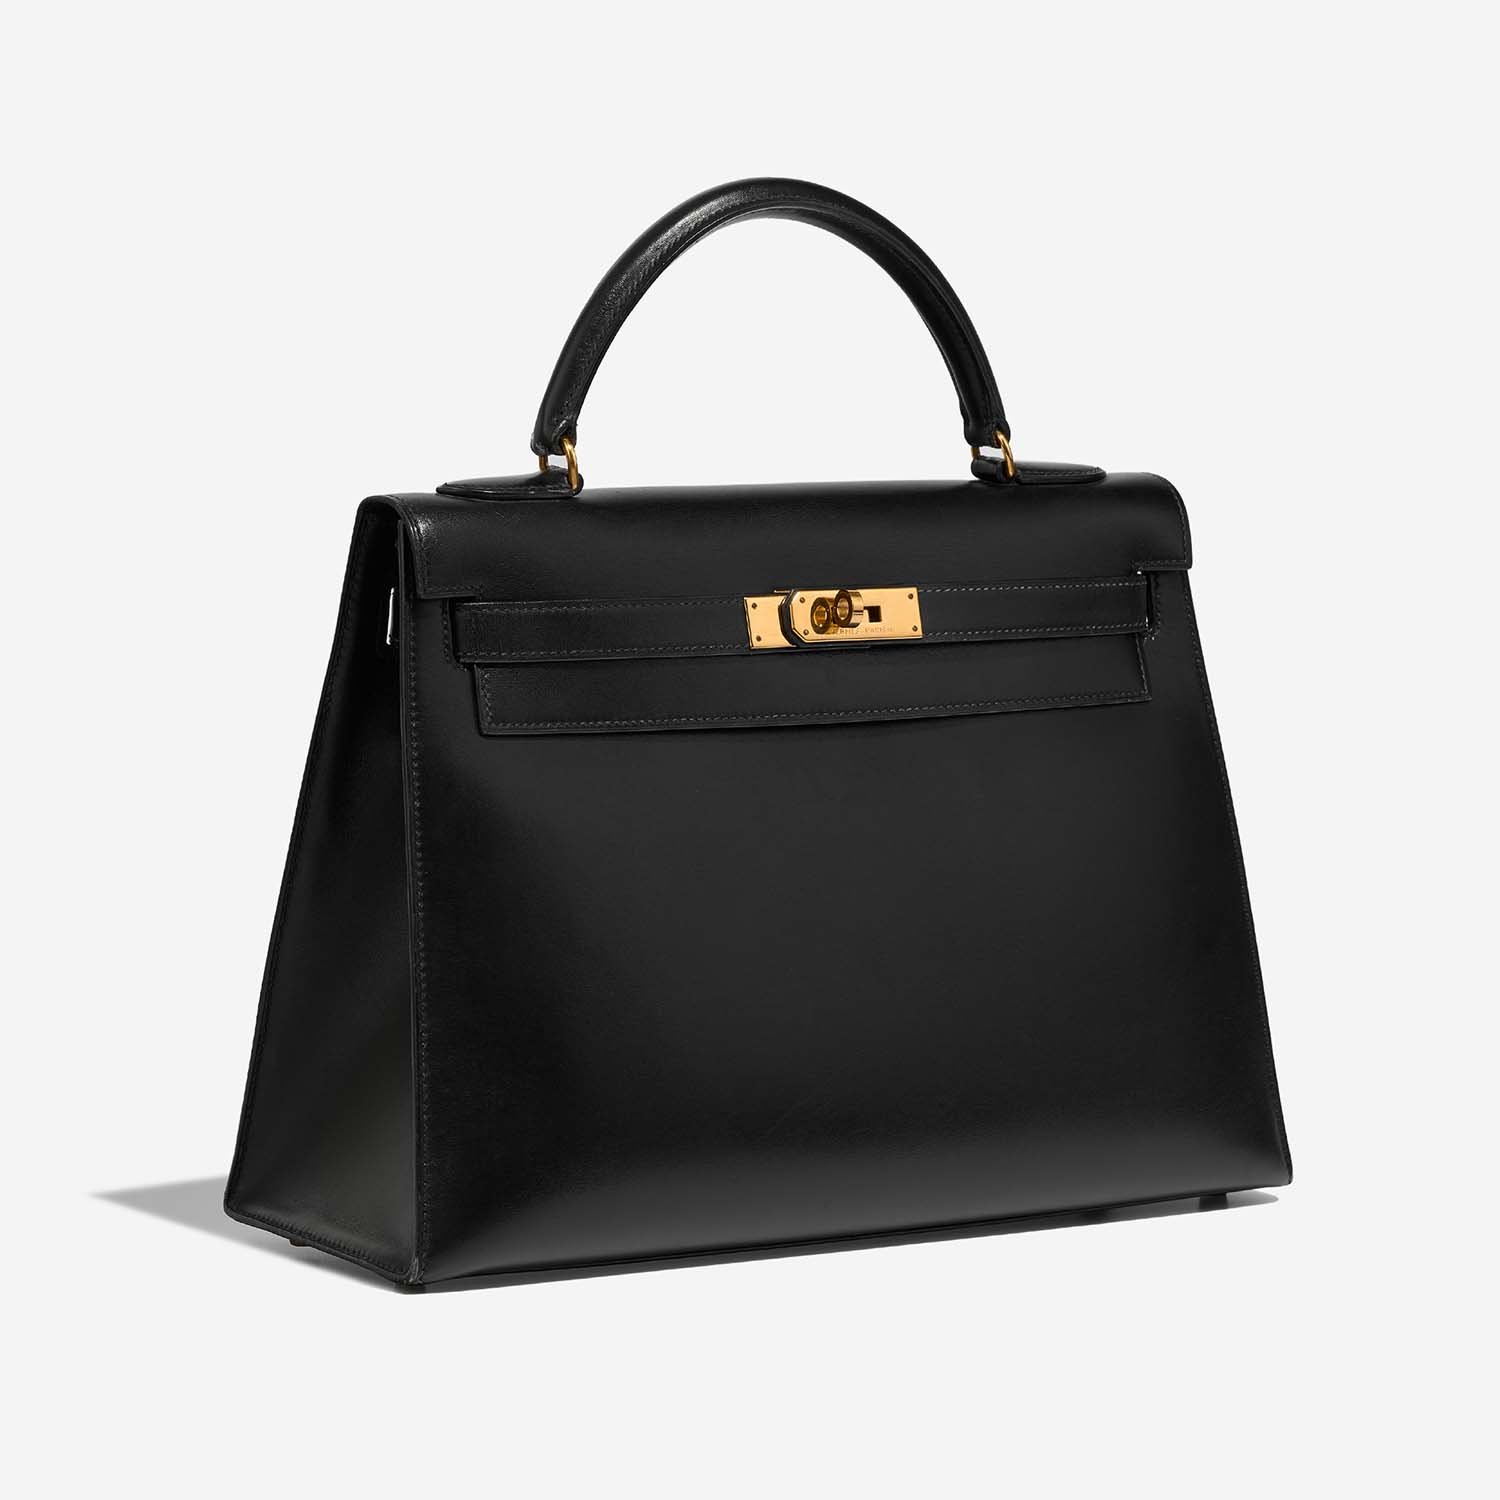 Hermes kelly bag luxury  Hermes kelly bag, Kelly bag, Bags